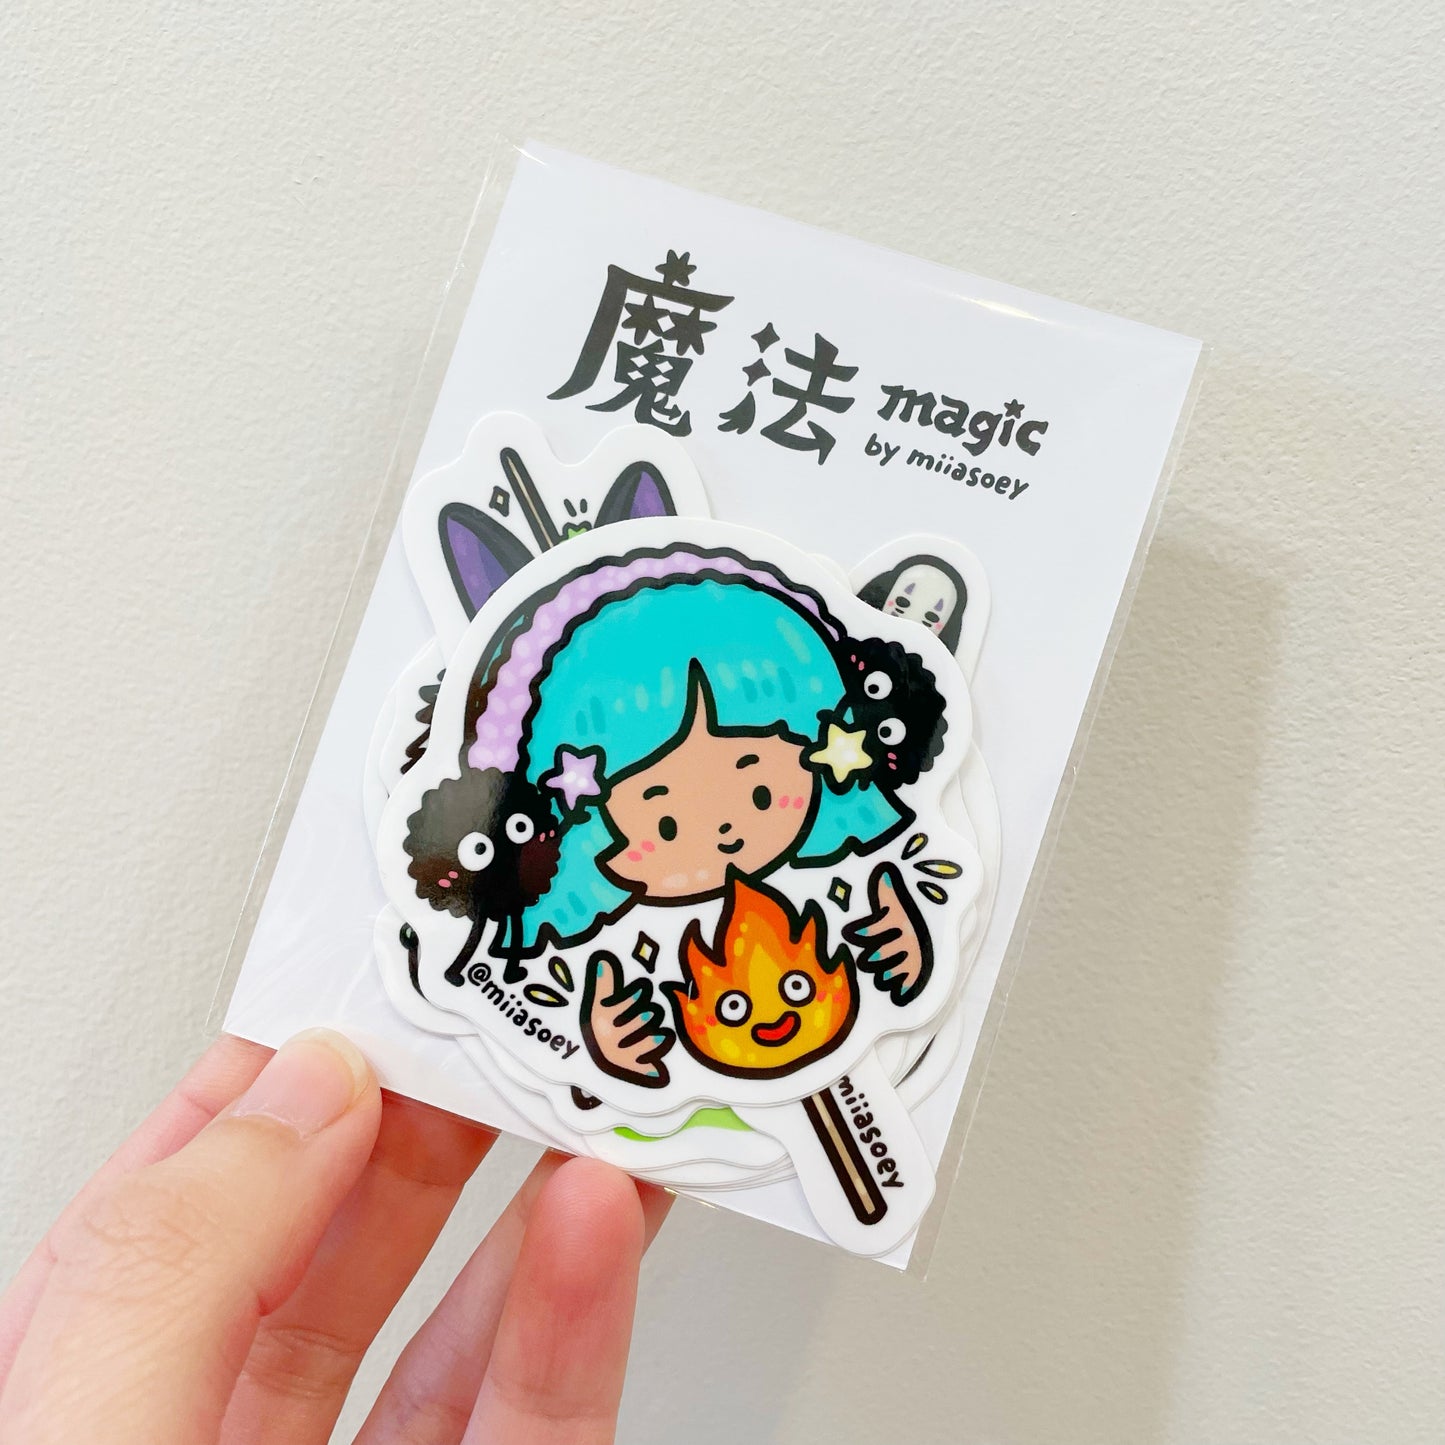 miiasoey: Sticker Packs